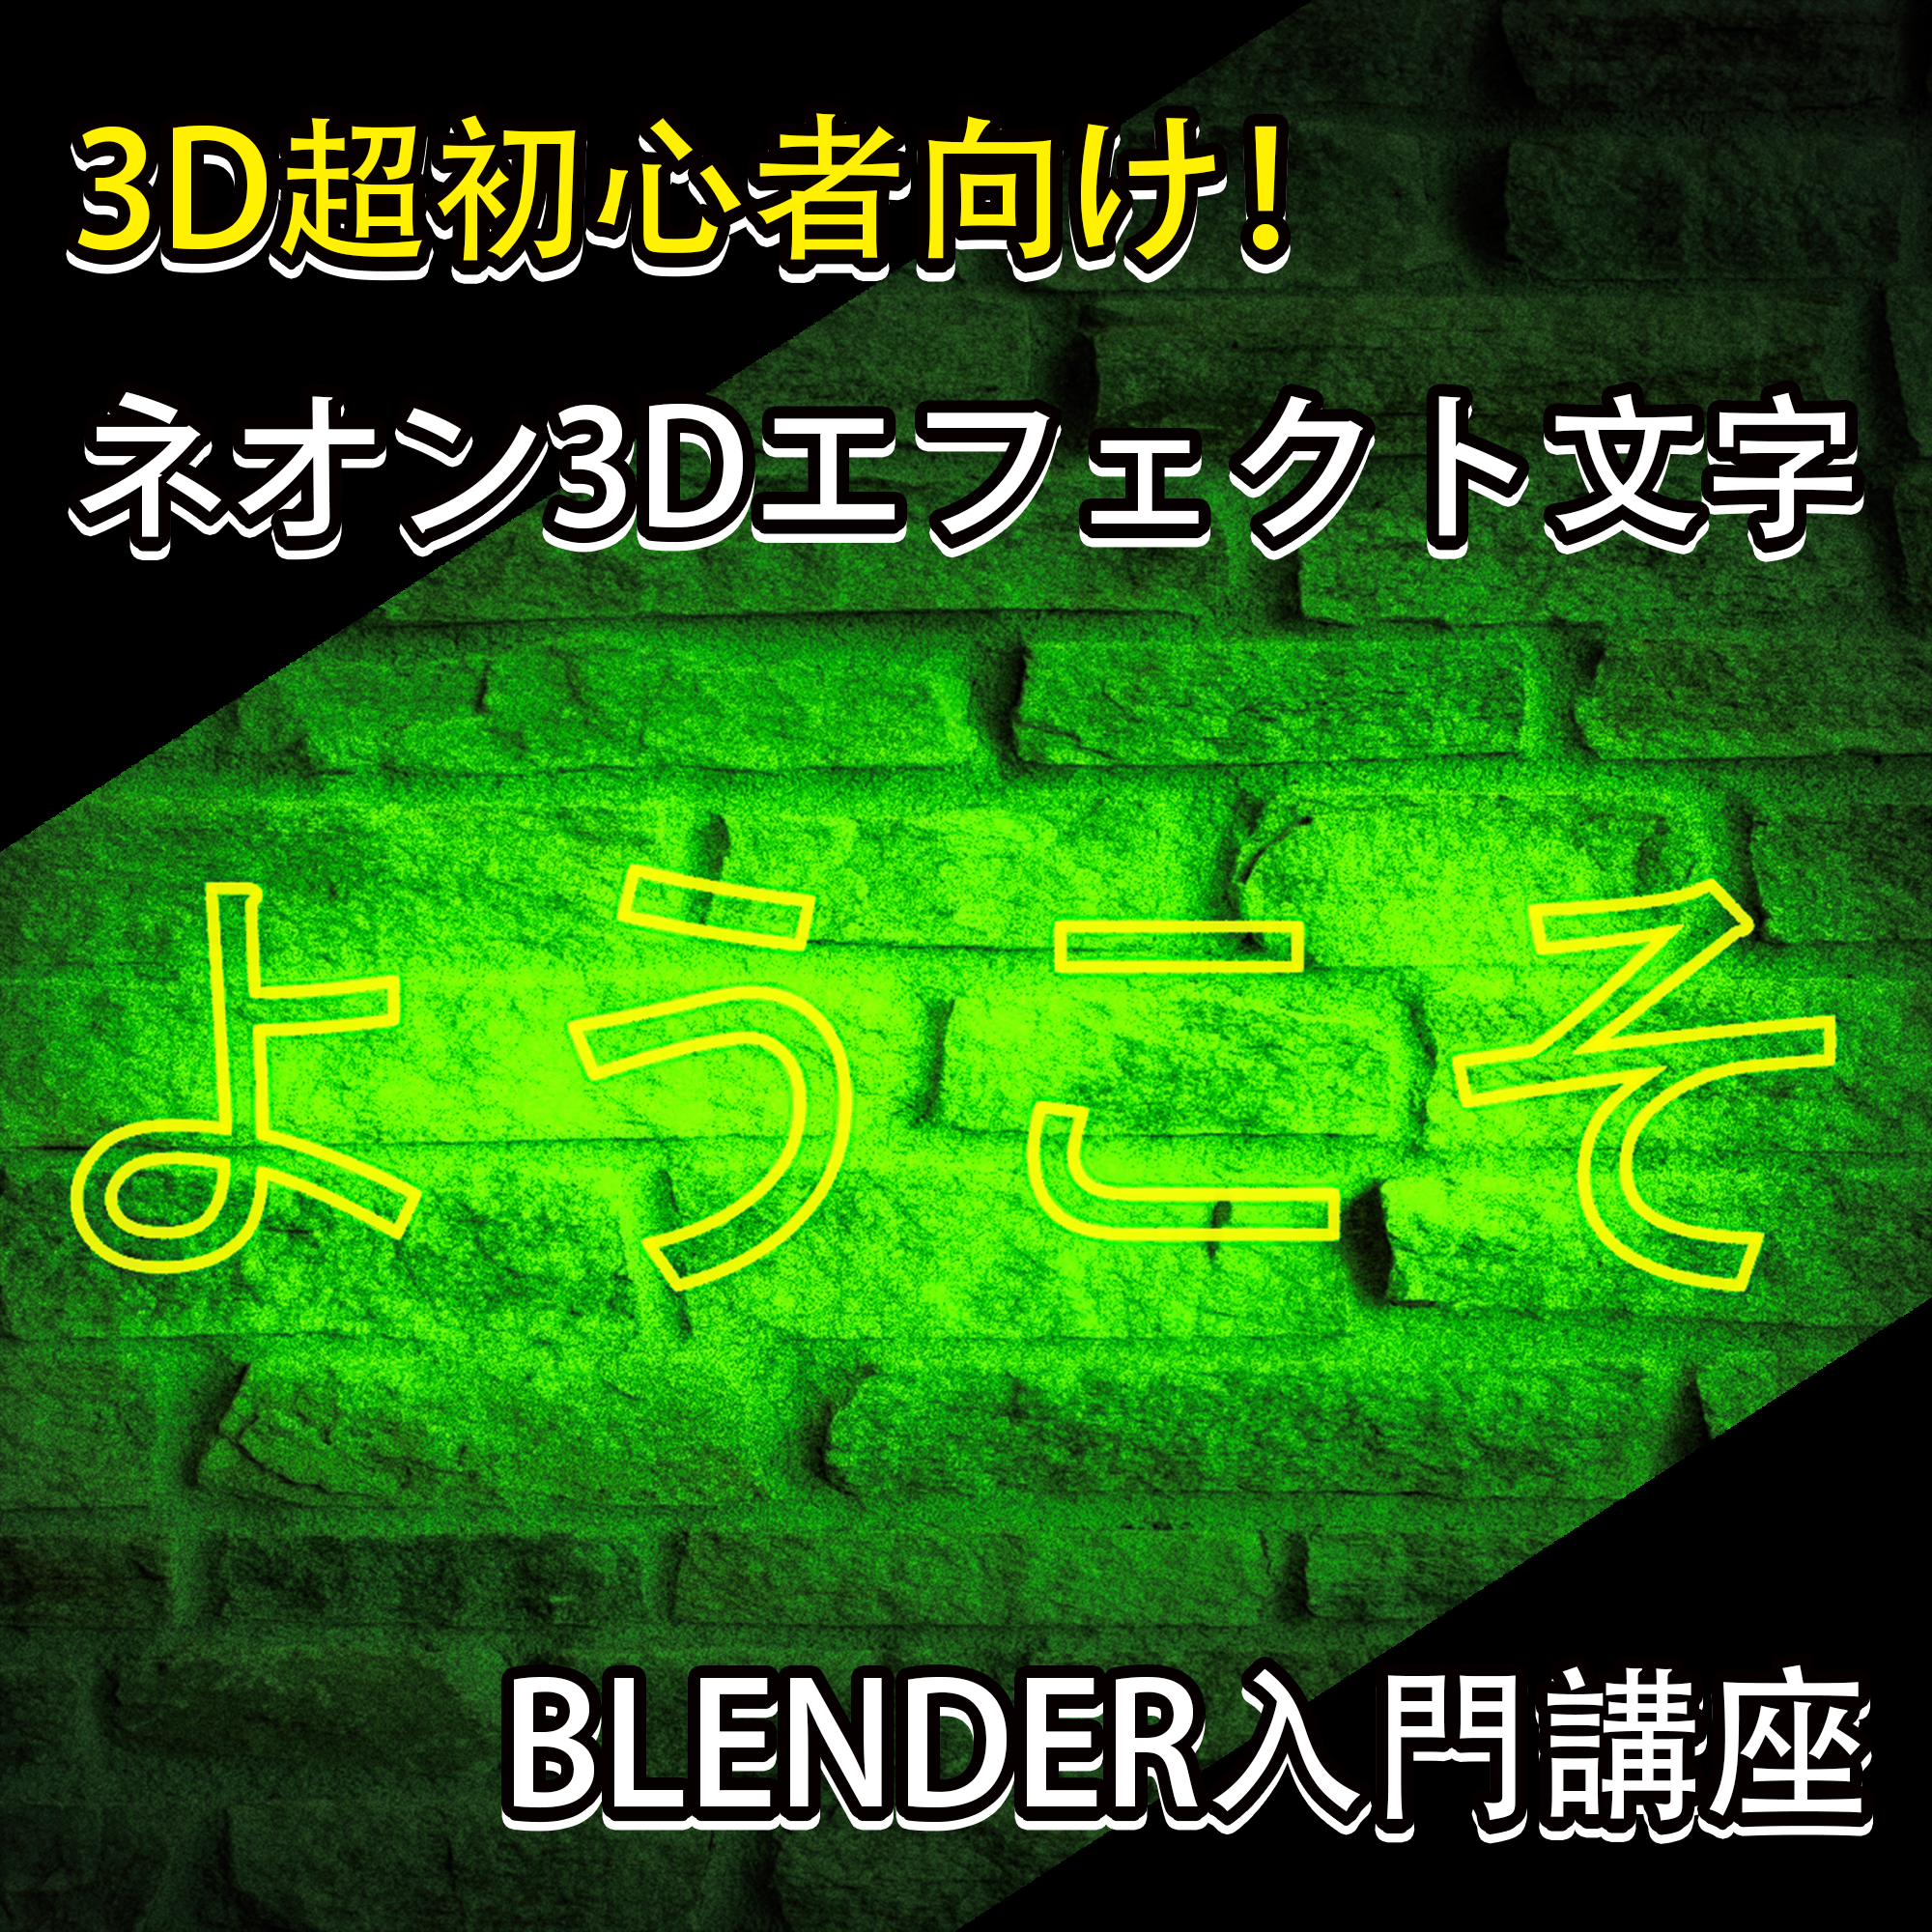 3d超初心者向け かっこいいネオンの3dエフェクト文字 ブロック背景をつくろう Blender入門講座 Free Illustlation くりえいてぃぶ